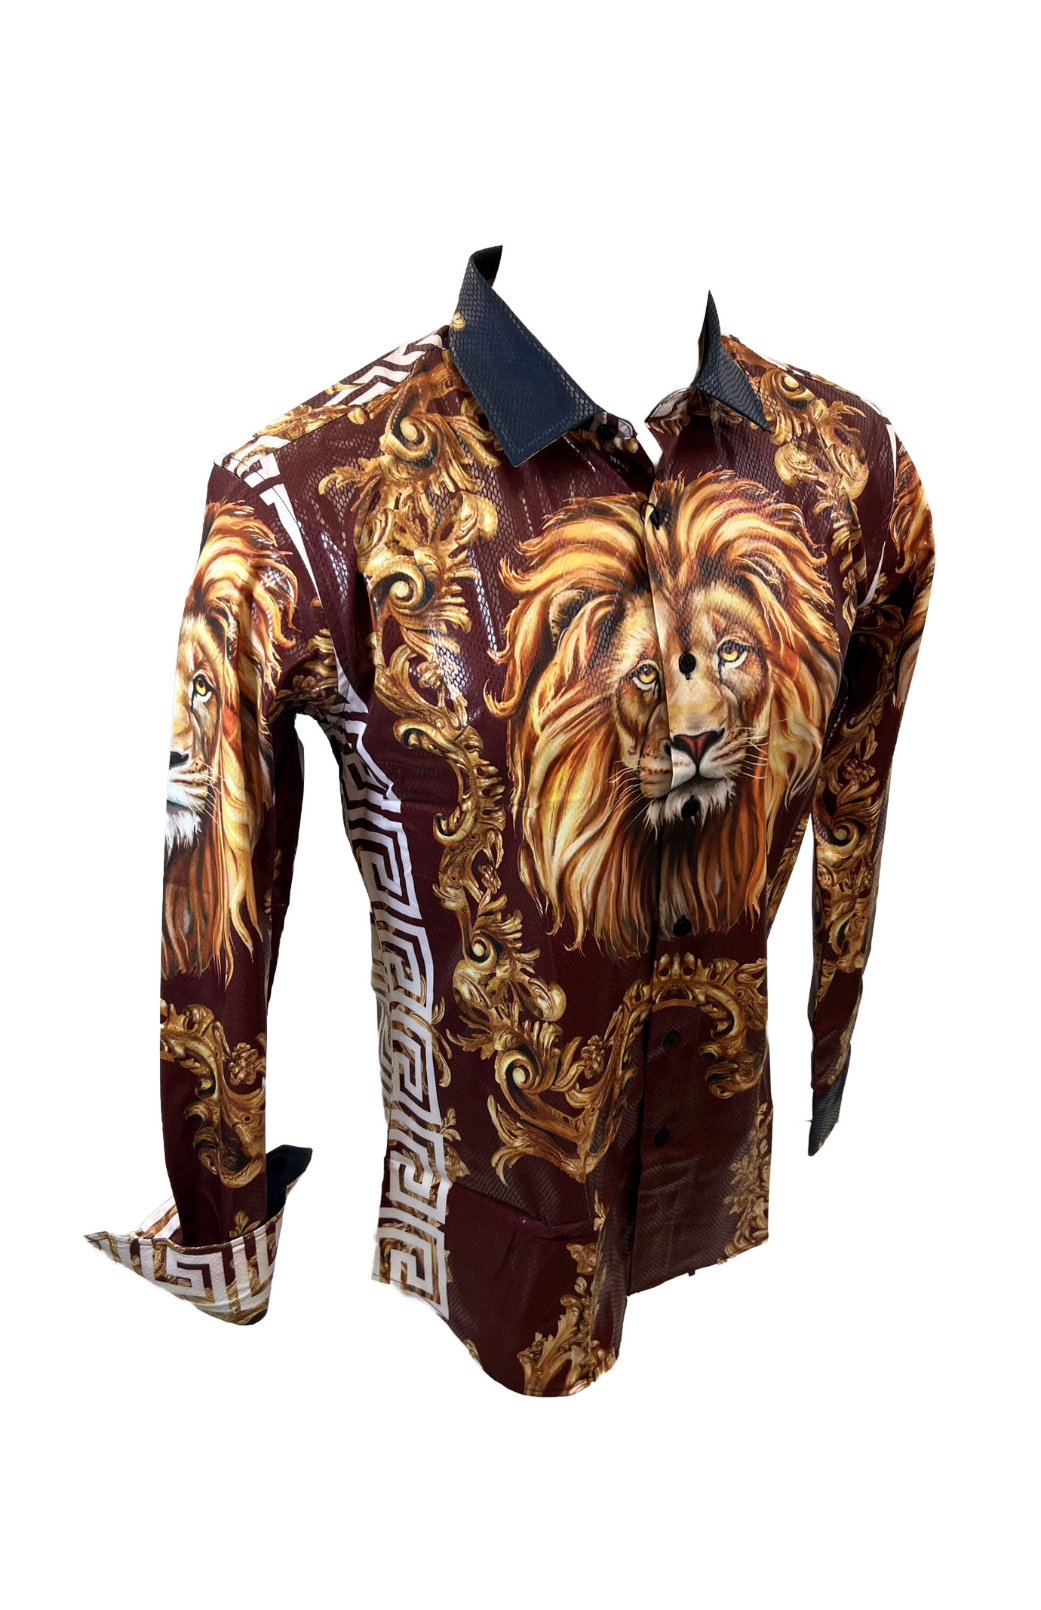 PREMIERE SHIRTS: BURGUNDY TIGER – Premiere Designer Shirts